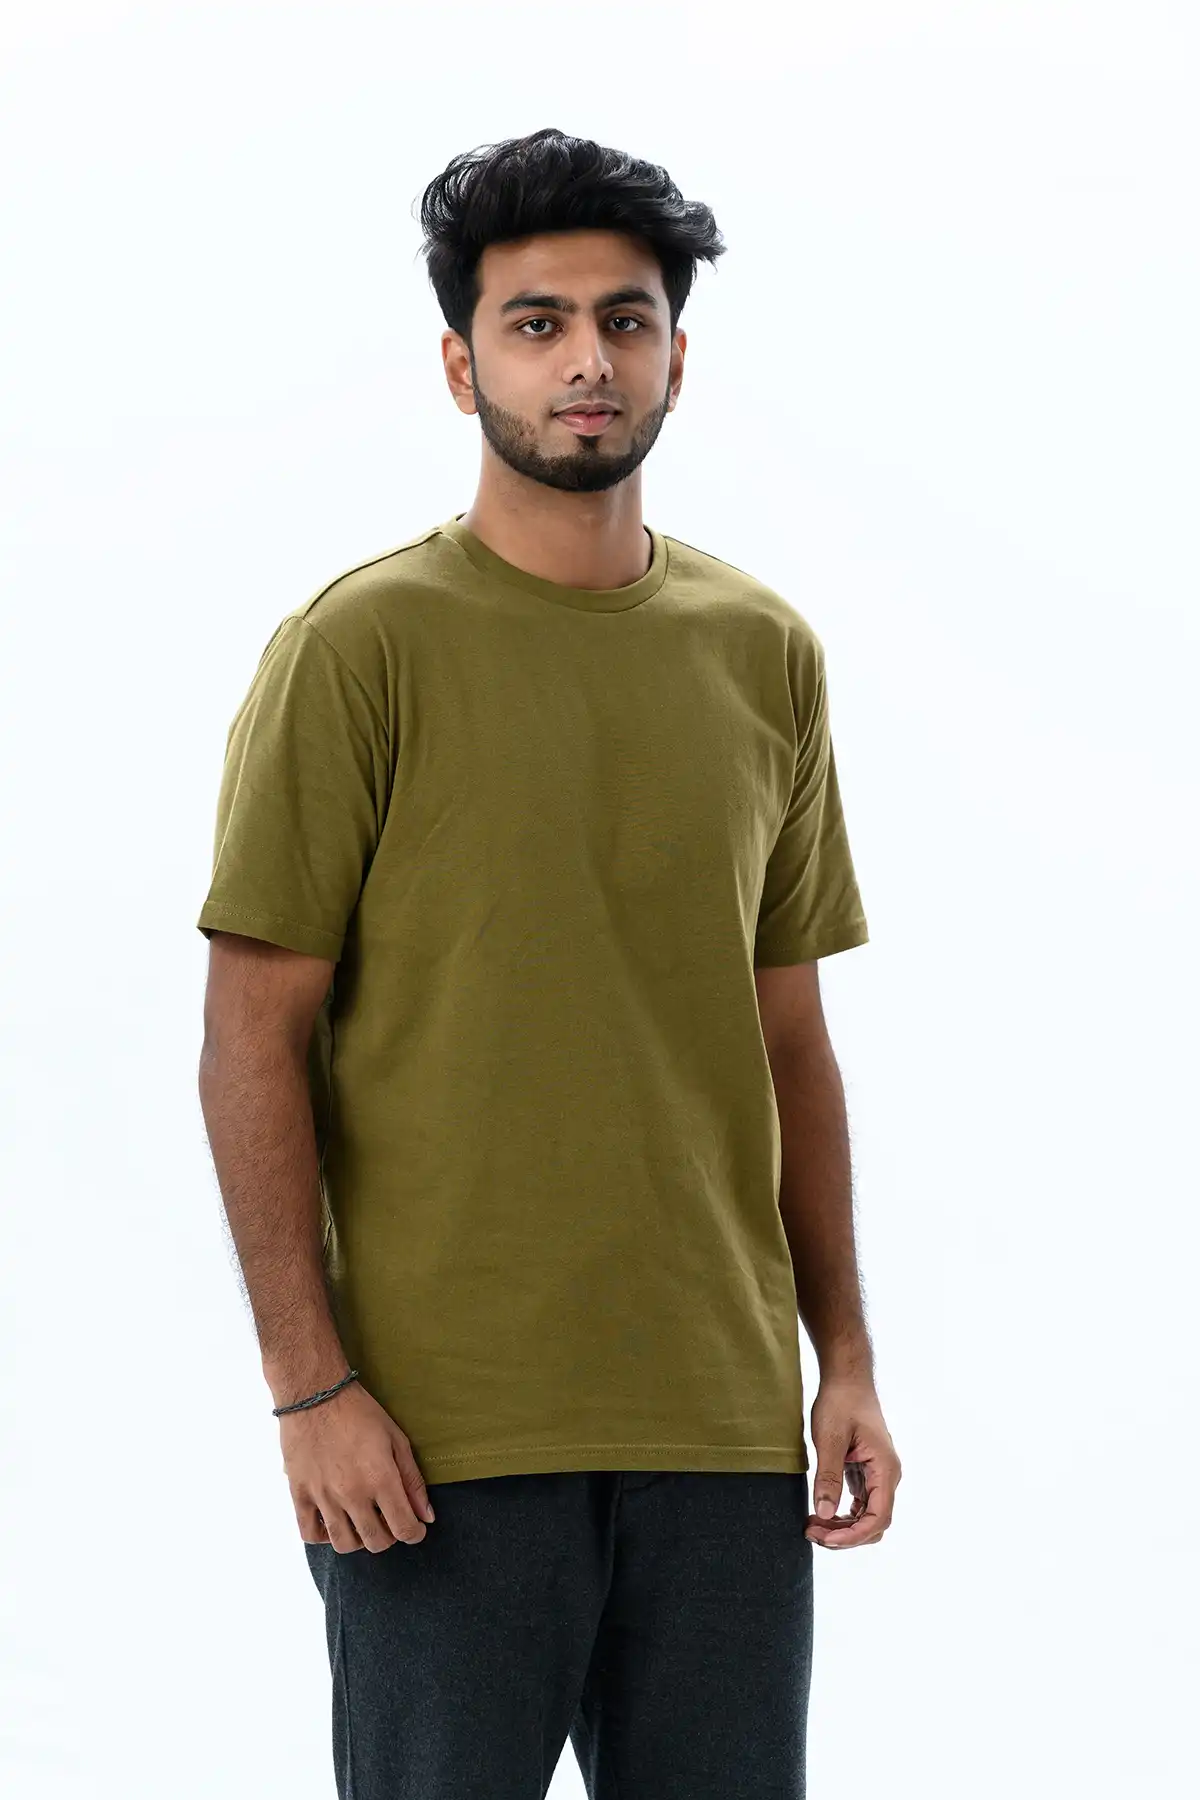 Unisex Crew Neck Cotton T-Shirt - Olive Green